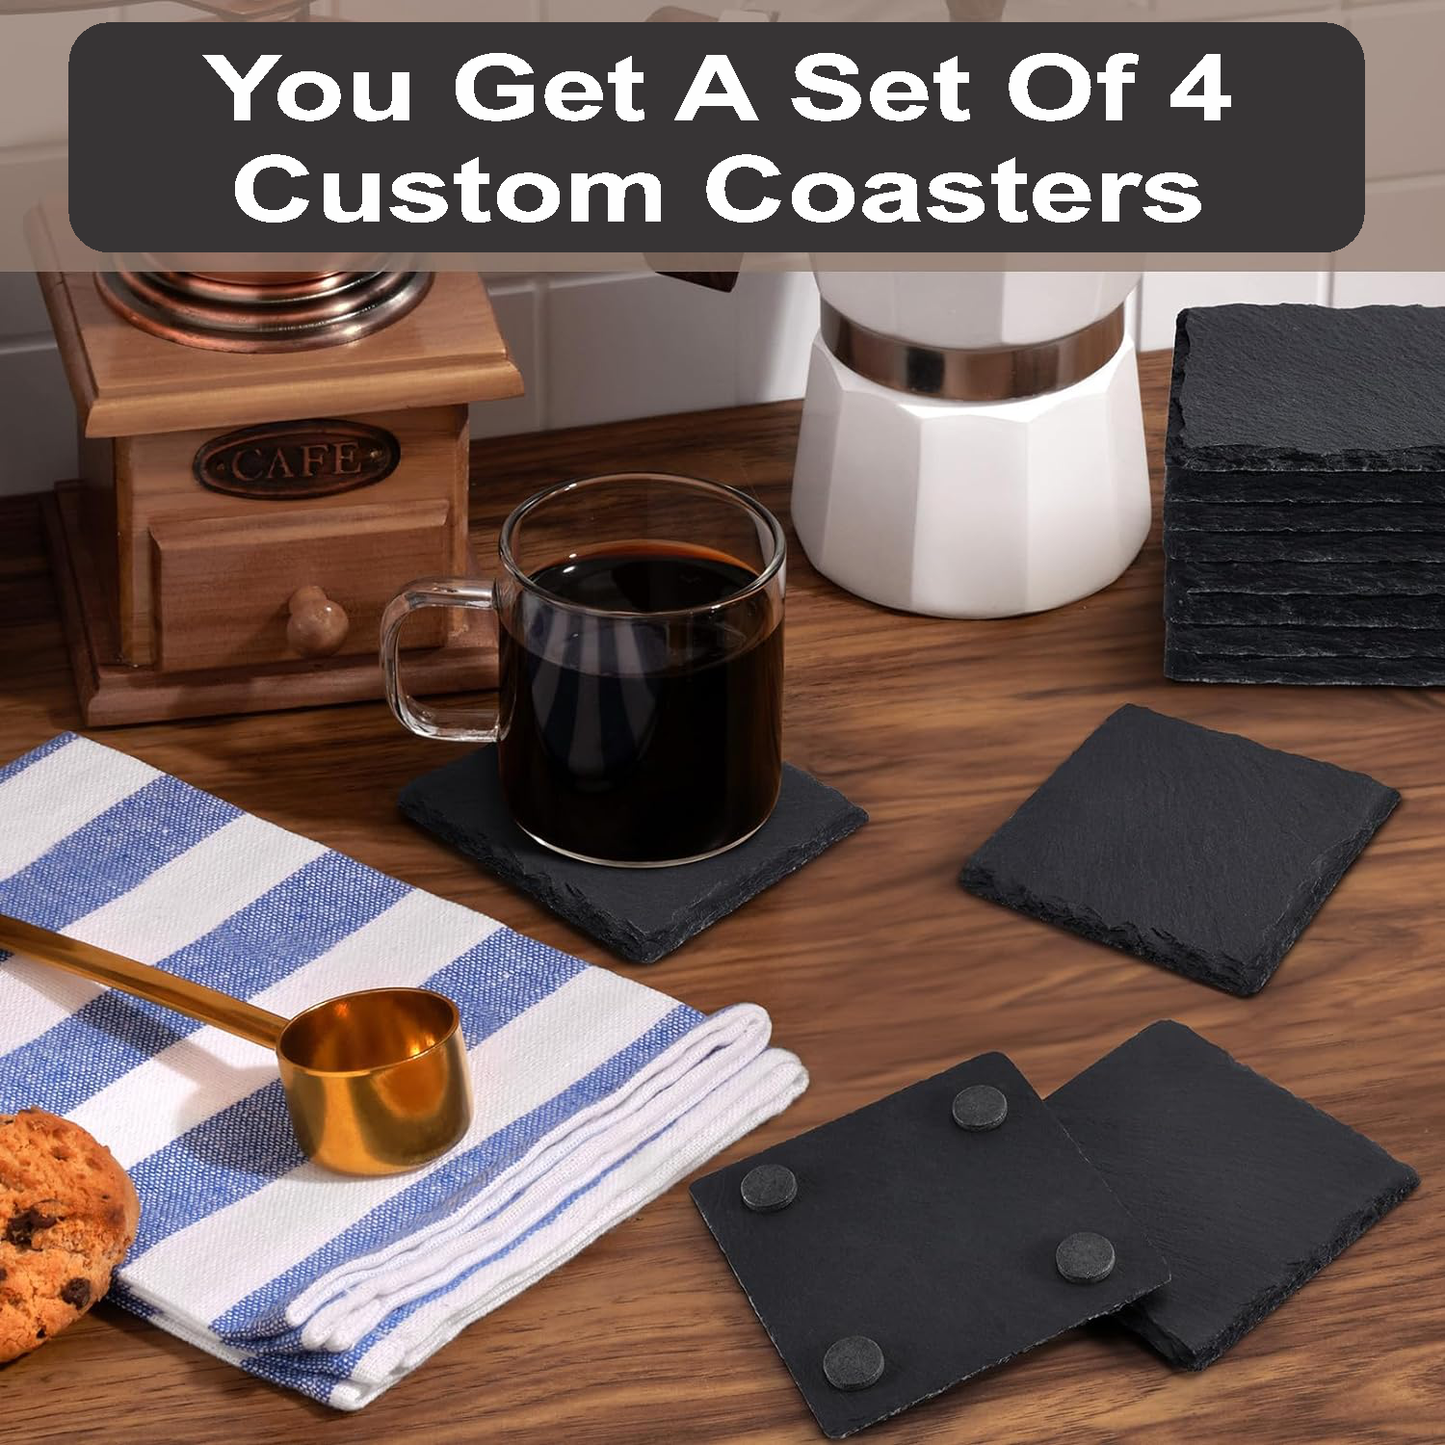 Designated Drinker - Set of 4 Black Slate Stone Coasters